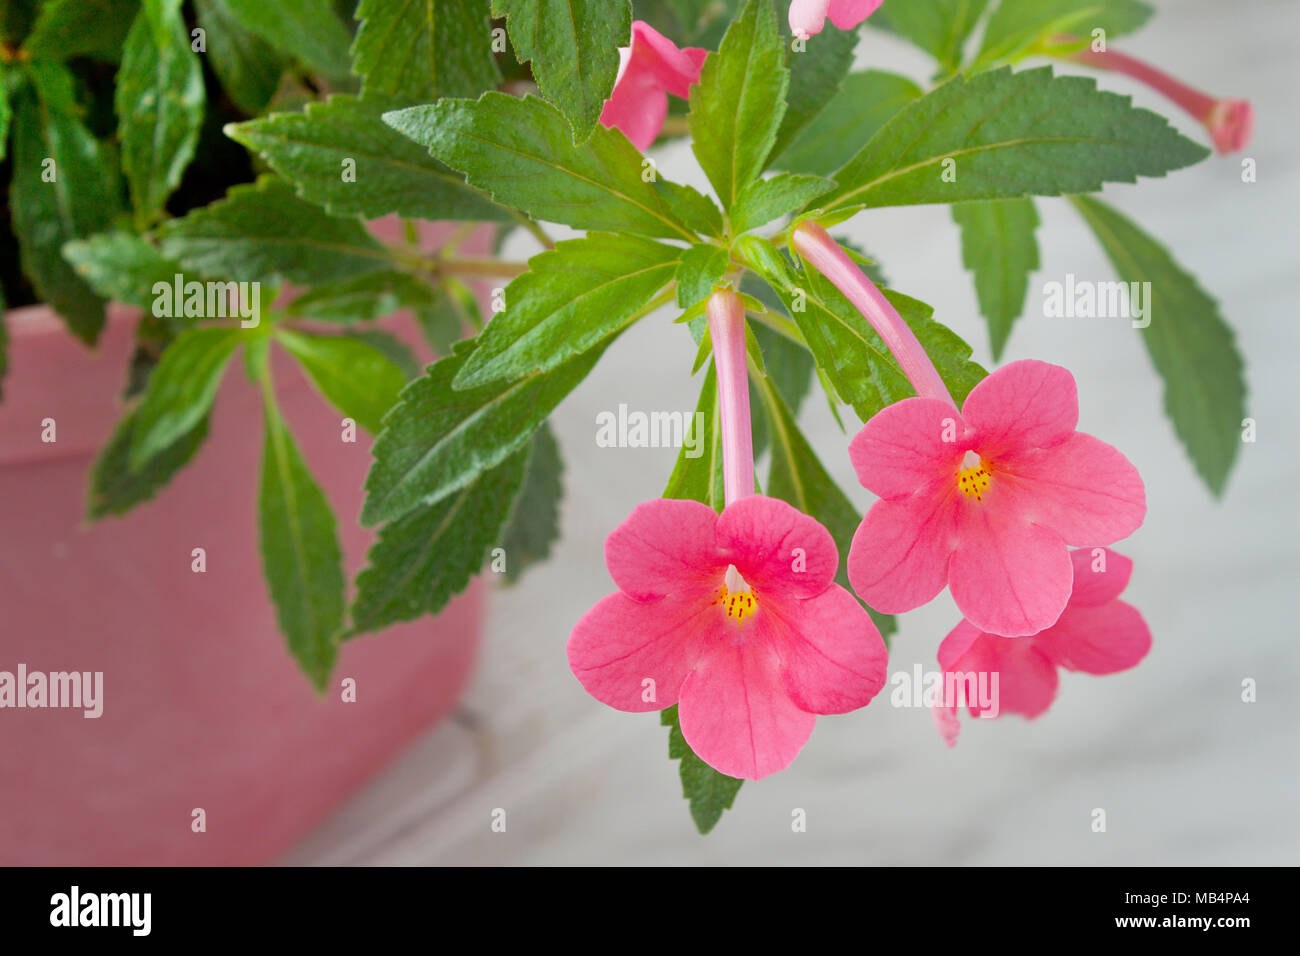 Two beautiful  pink flowers home plants (Achimenes) Stock Photo